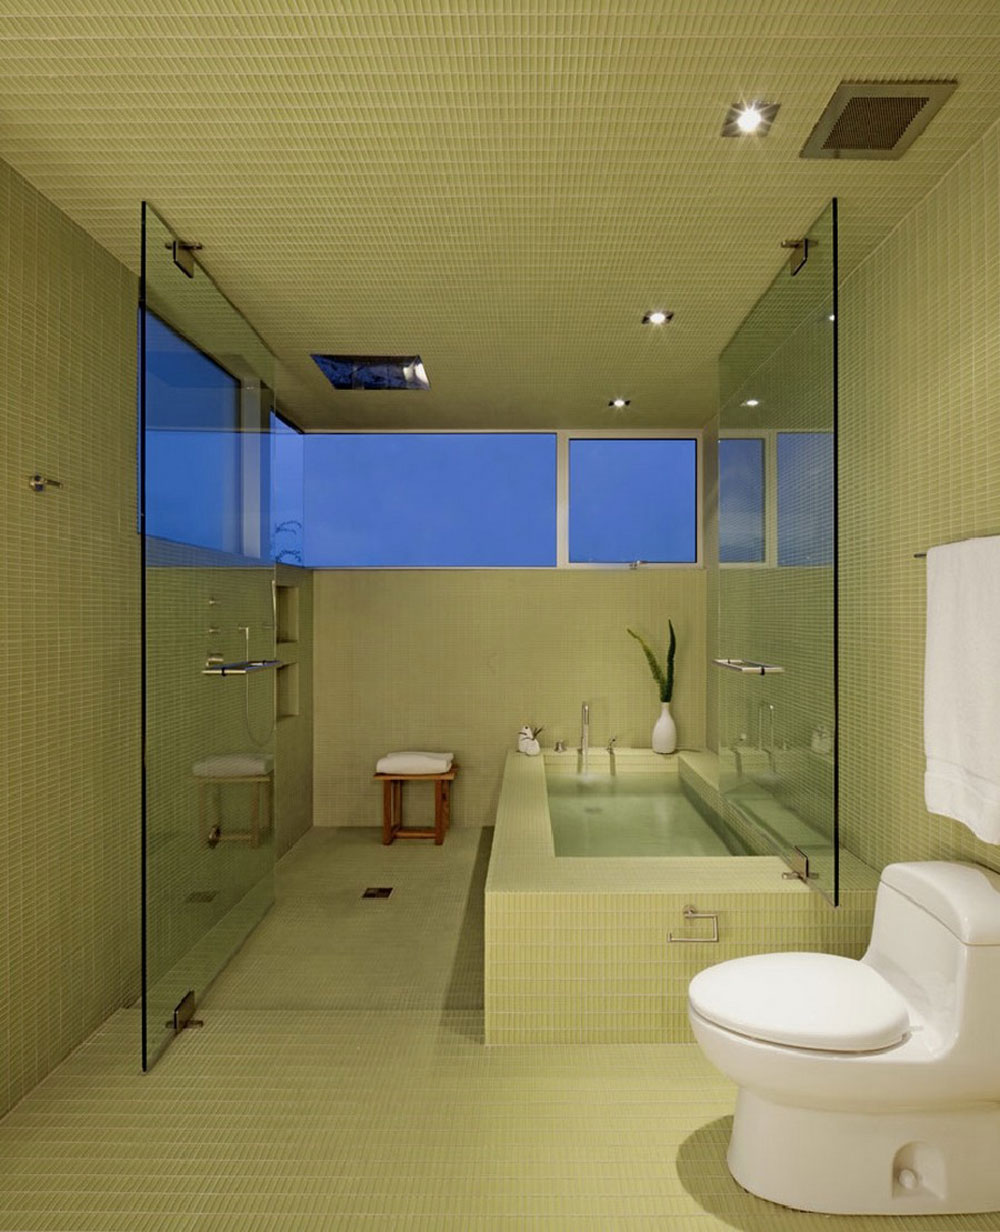 Bathroom-interior-design-styles-to-look-11-bathroom-interior-design-styles-to-look-out